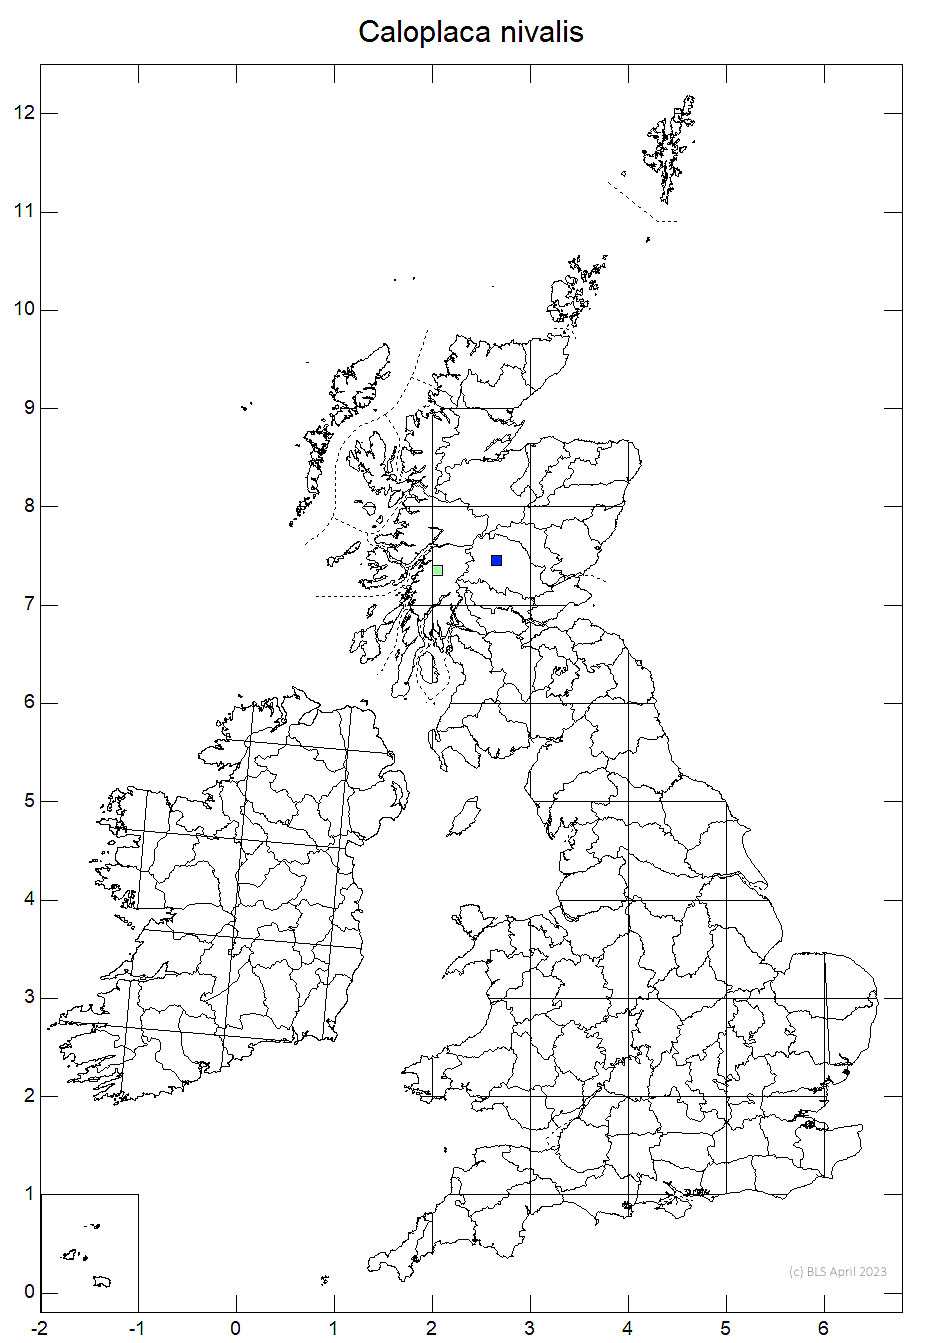 Caloplaca nivalis 10km sq distribution map